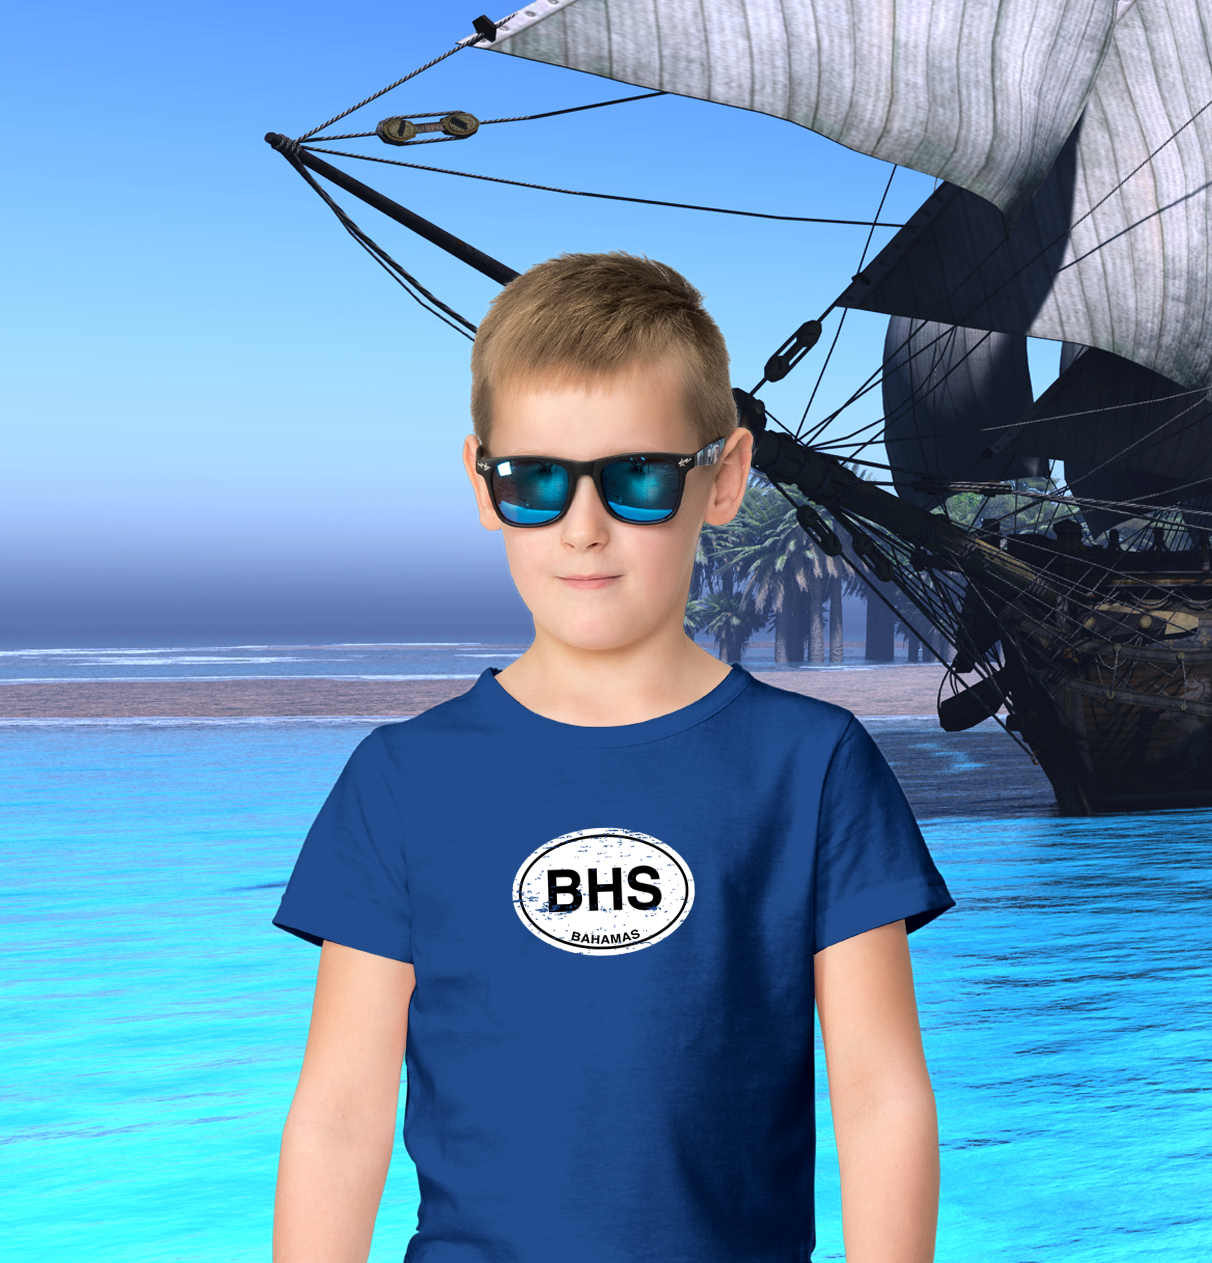 Bahamas Classic Youth T-Shirt - My Destination Location